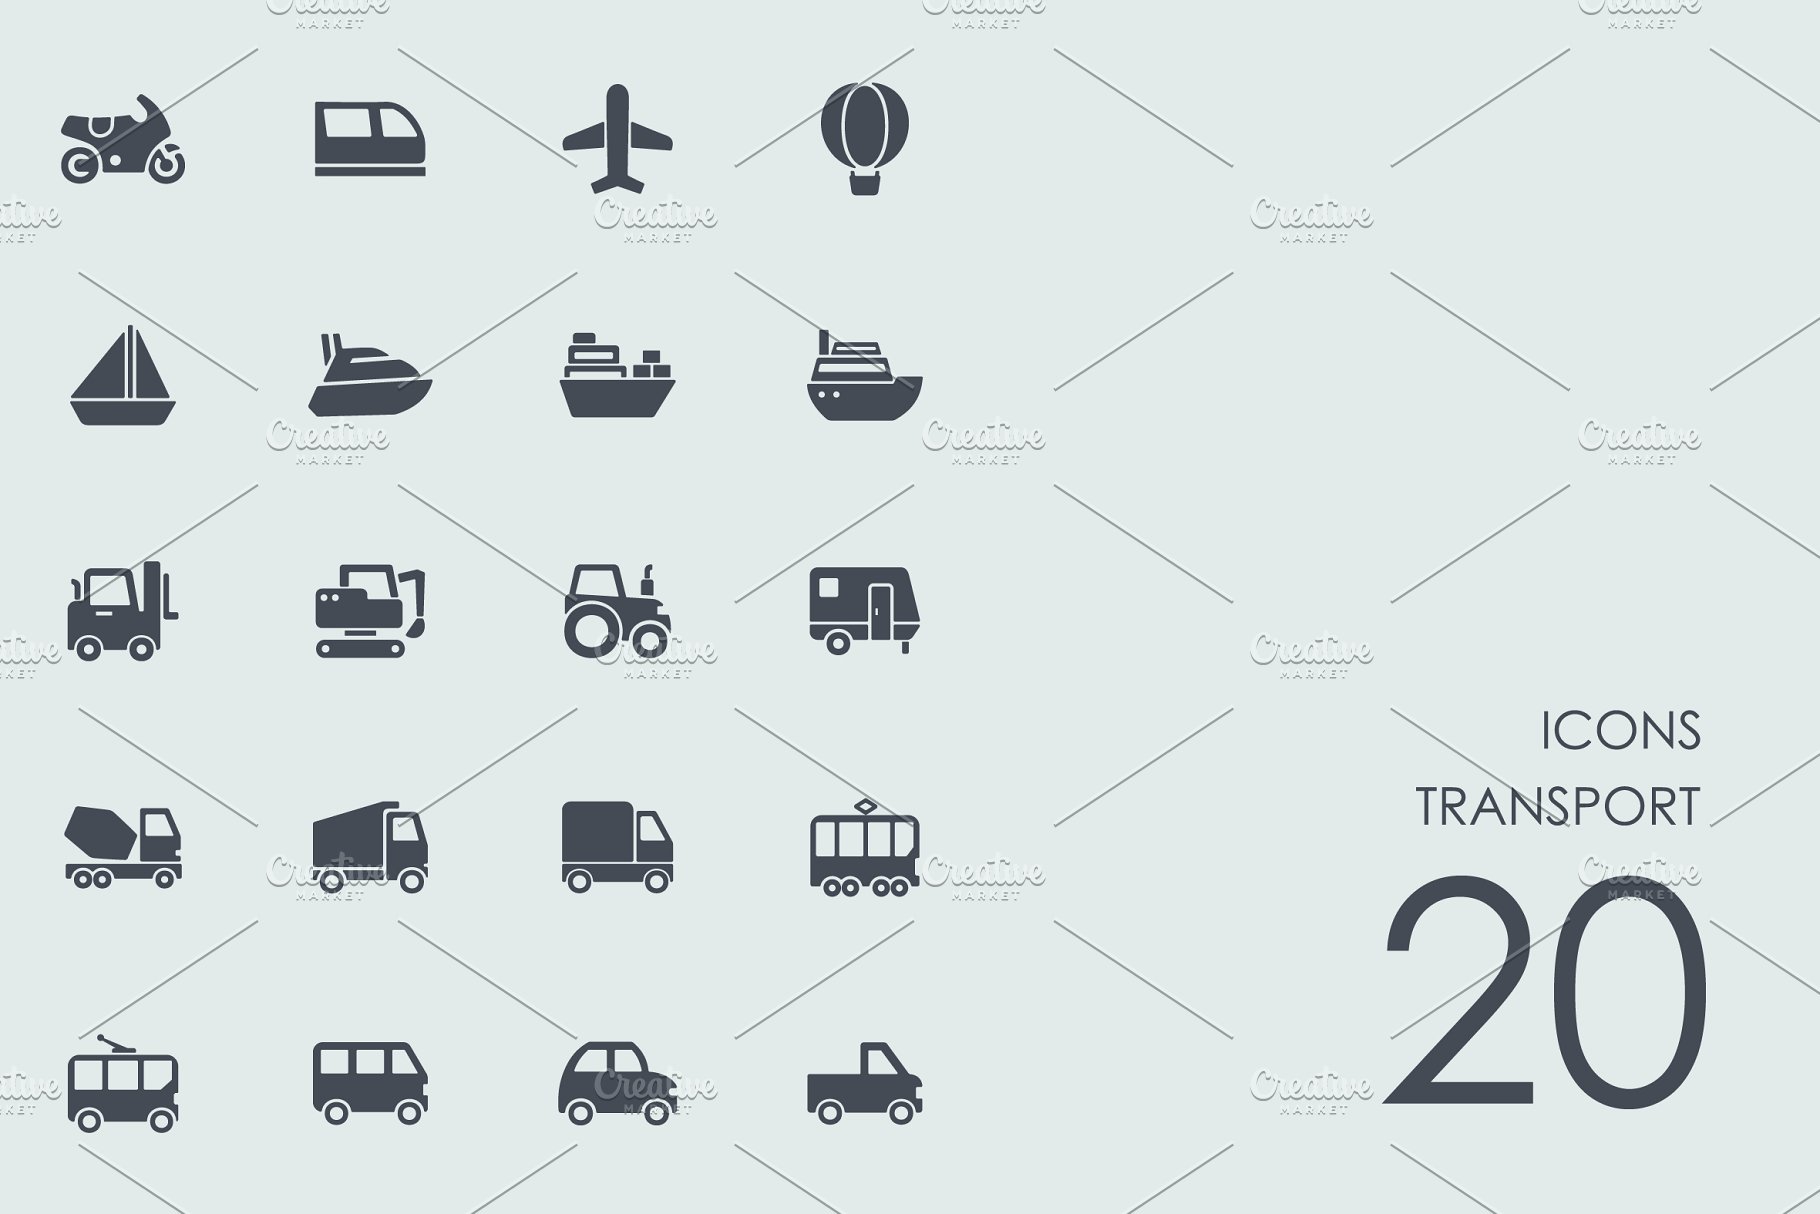 常见交通工具图标素材 Transport icons插图